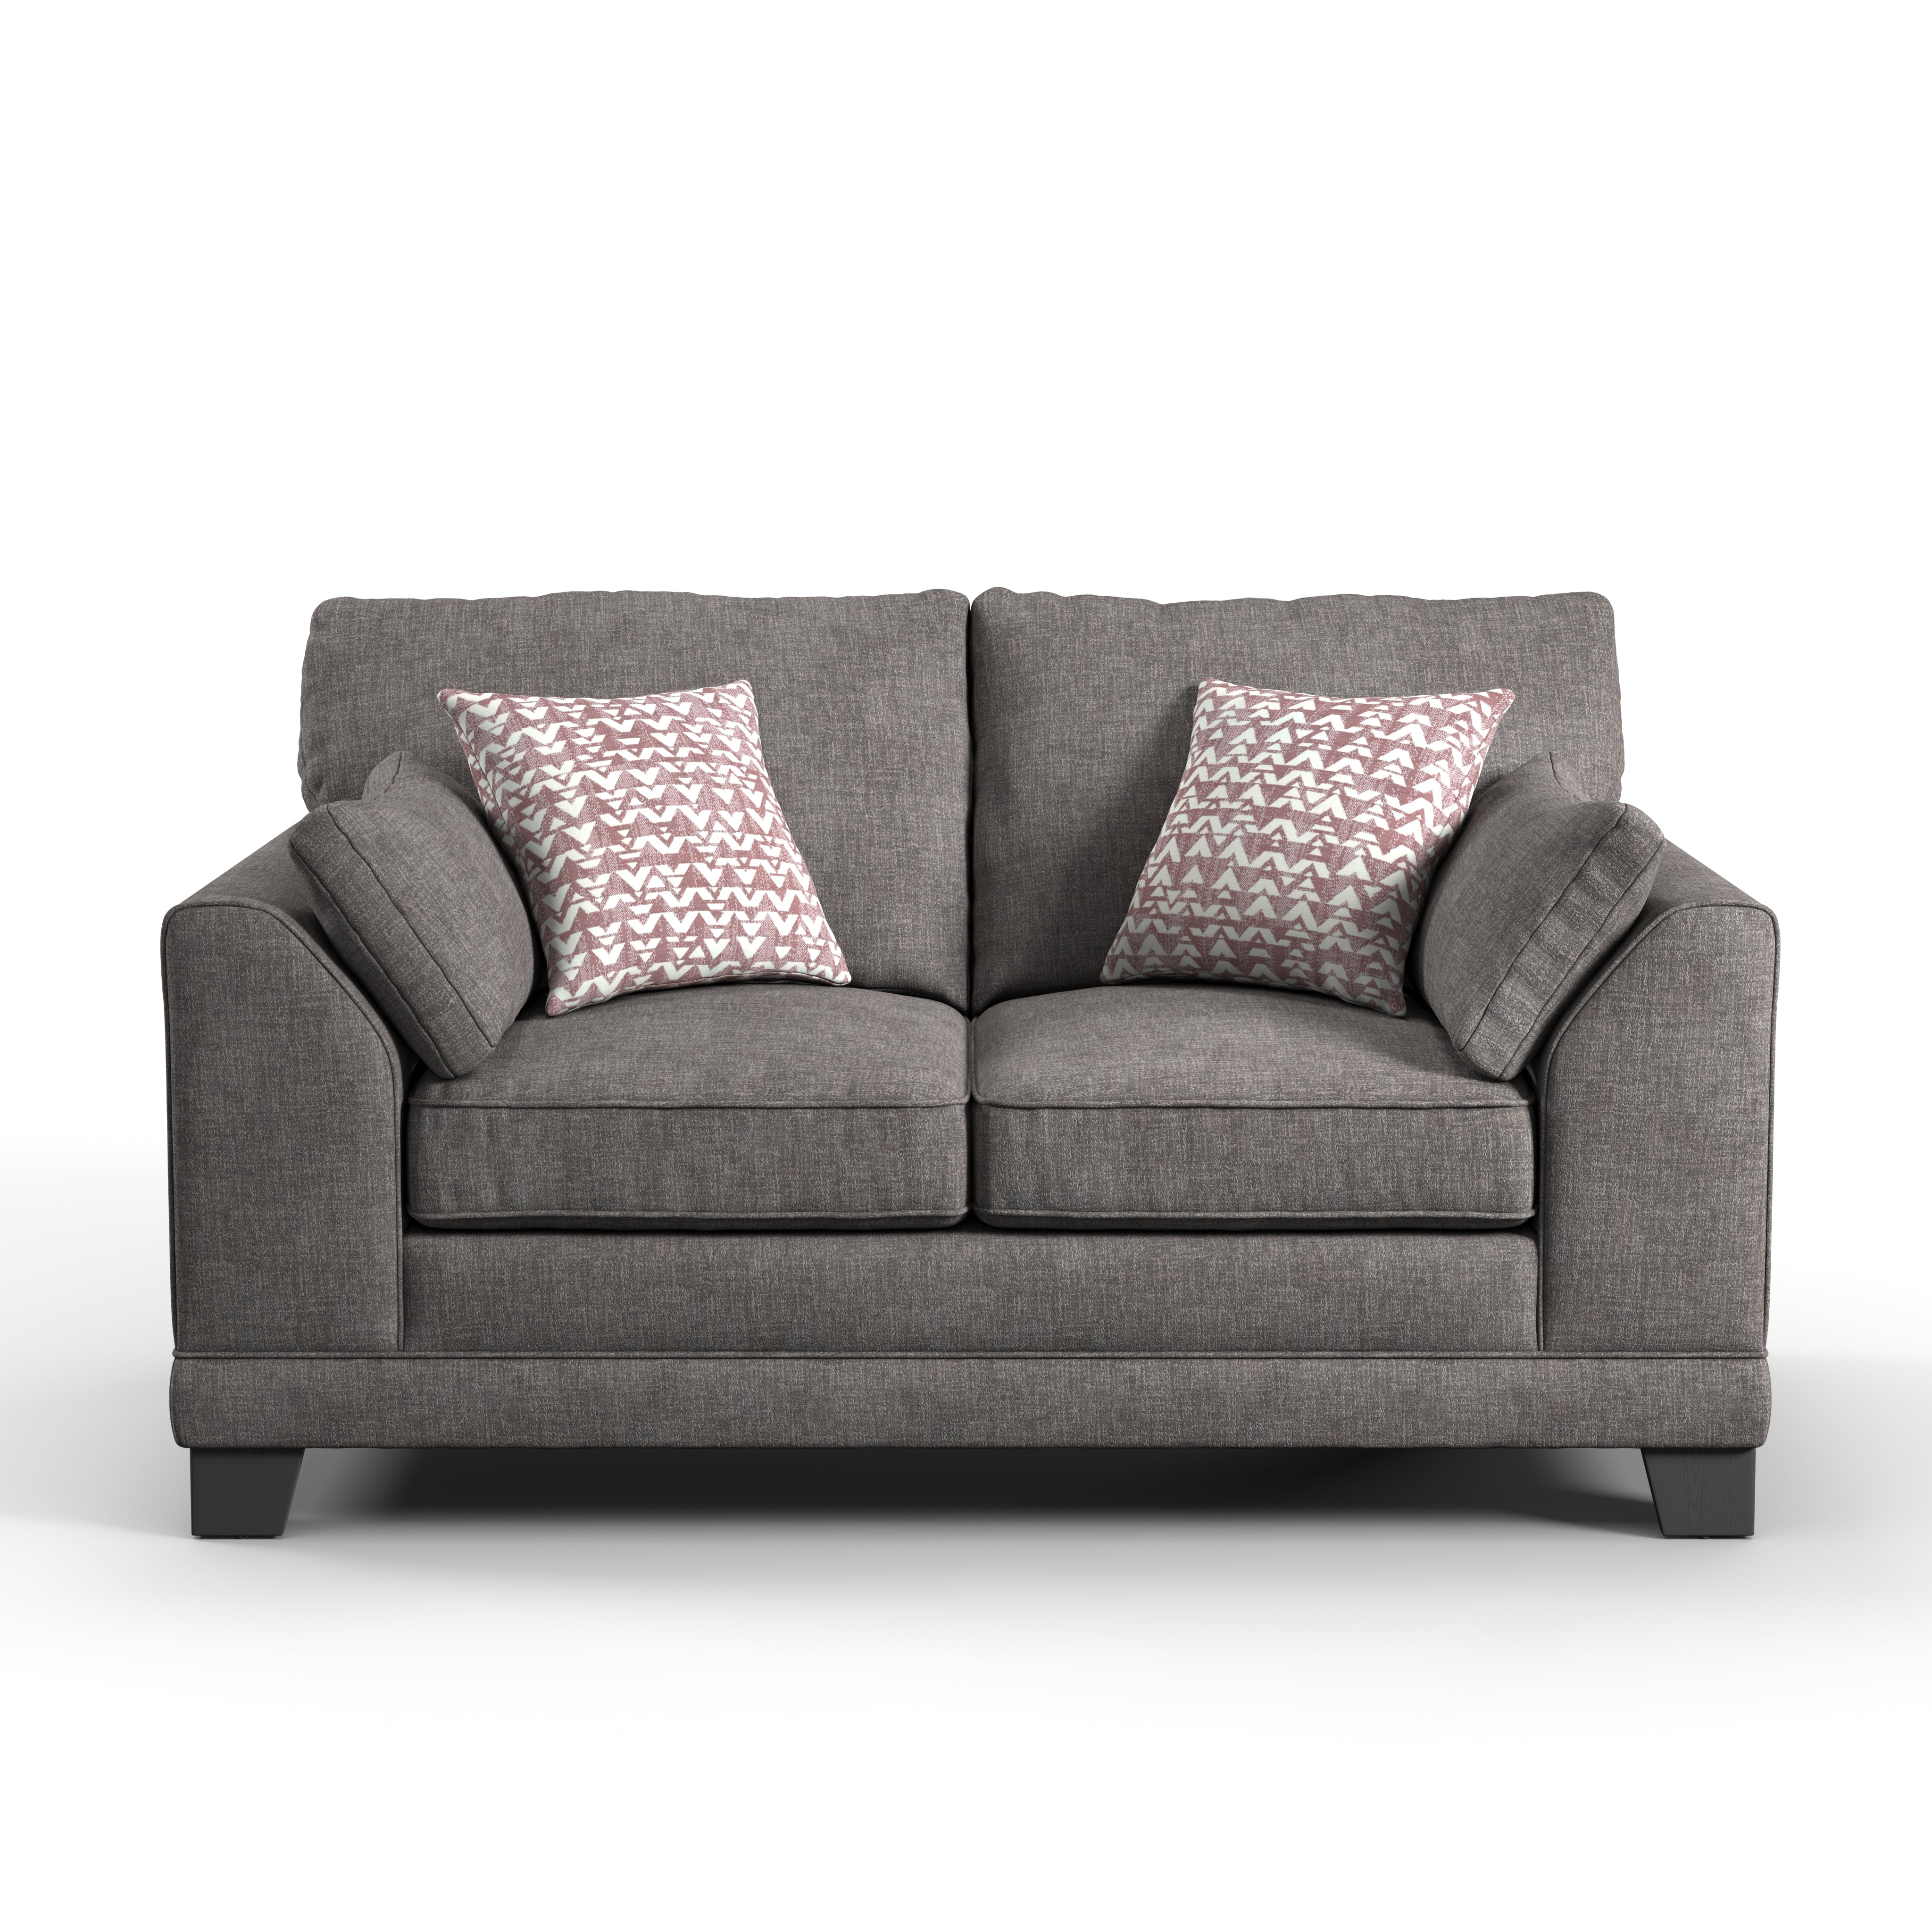 Hilliard Fabric Sofa Collection